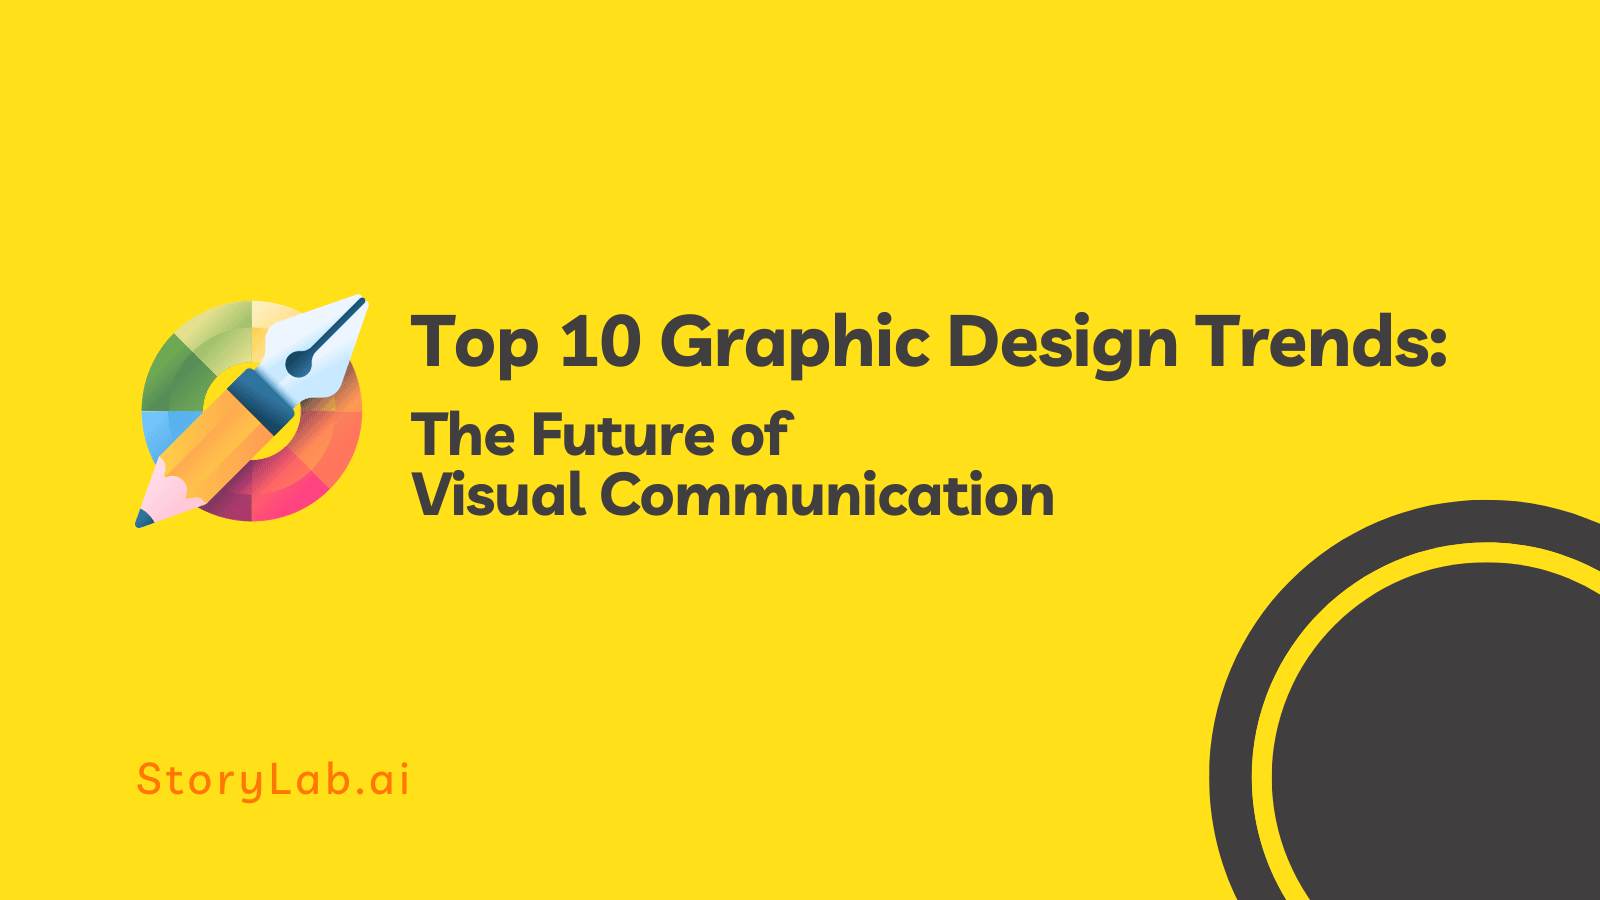 Top 10 Graphic Design Trends